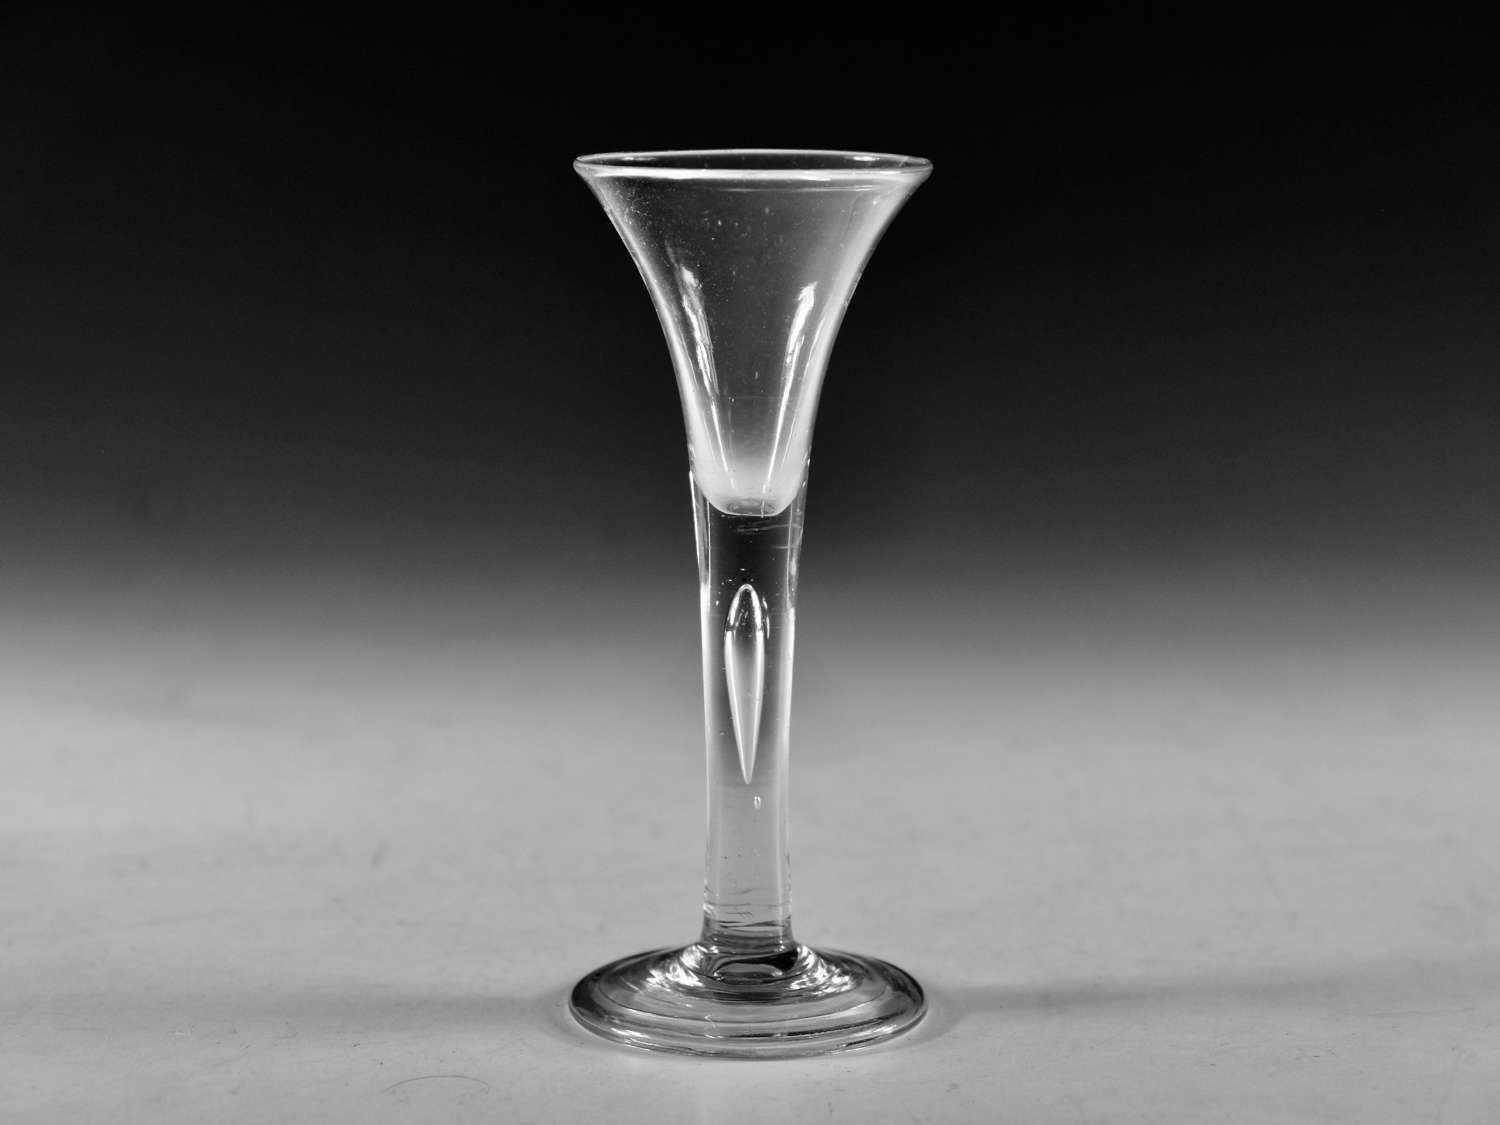 Antique glass - plain stem wine glass Engish c1760